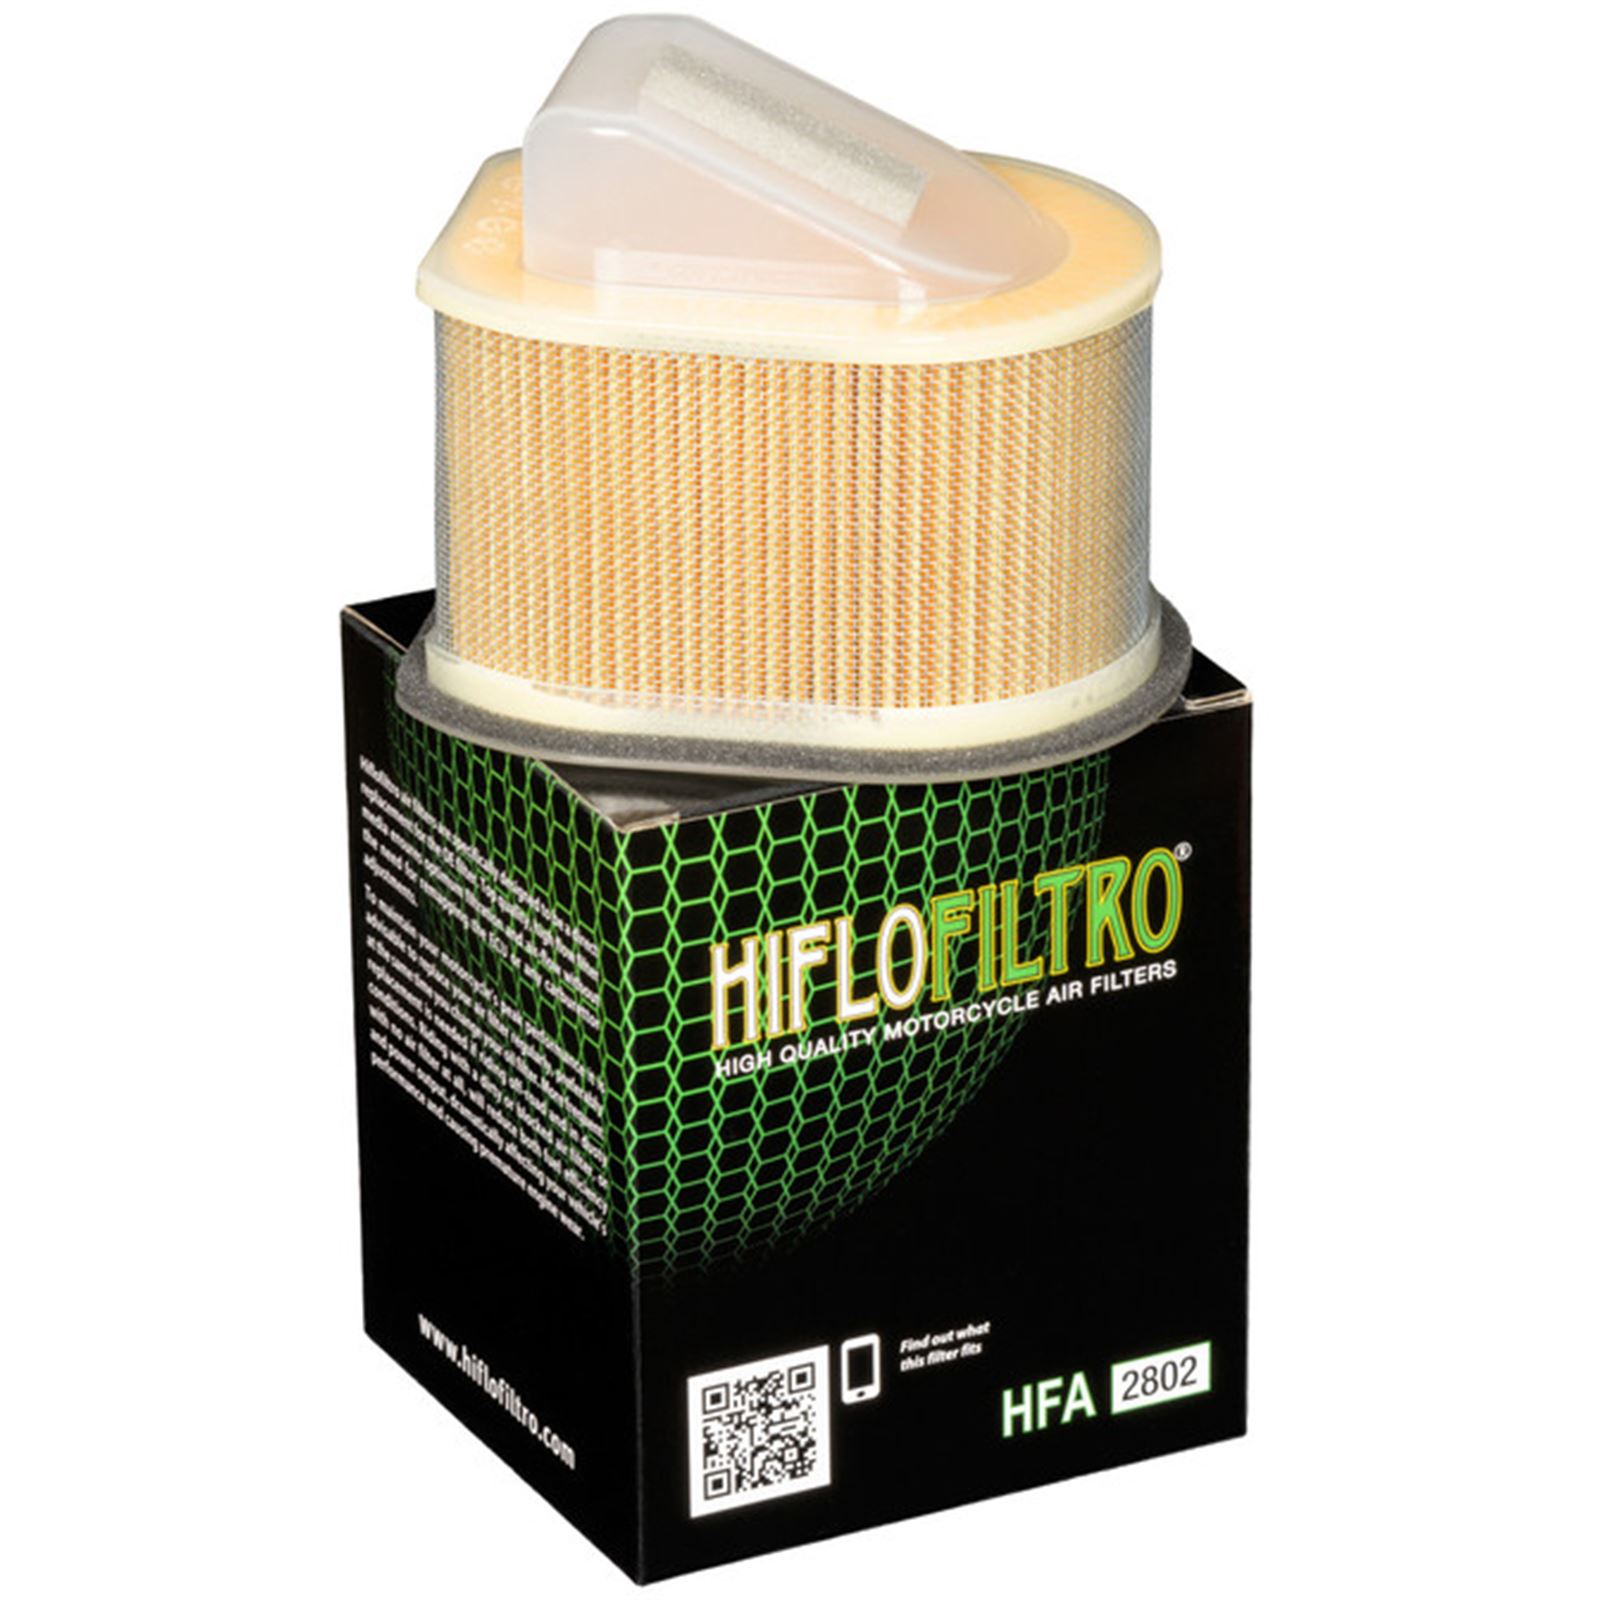 HIFLO Luftfilter HFA4703